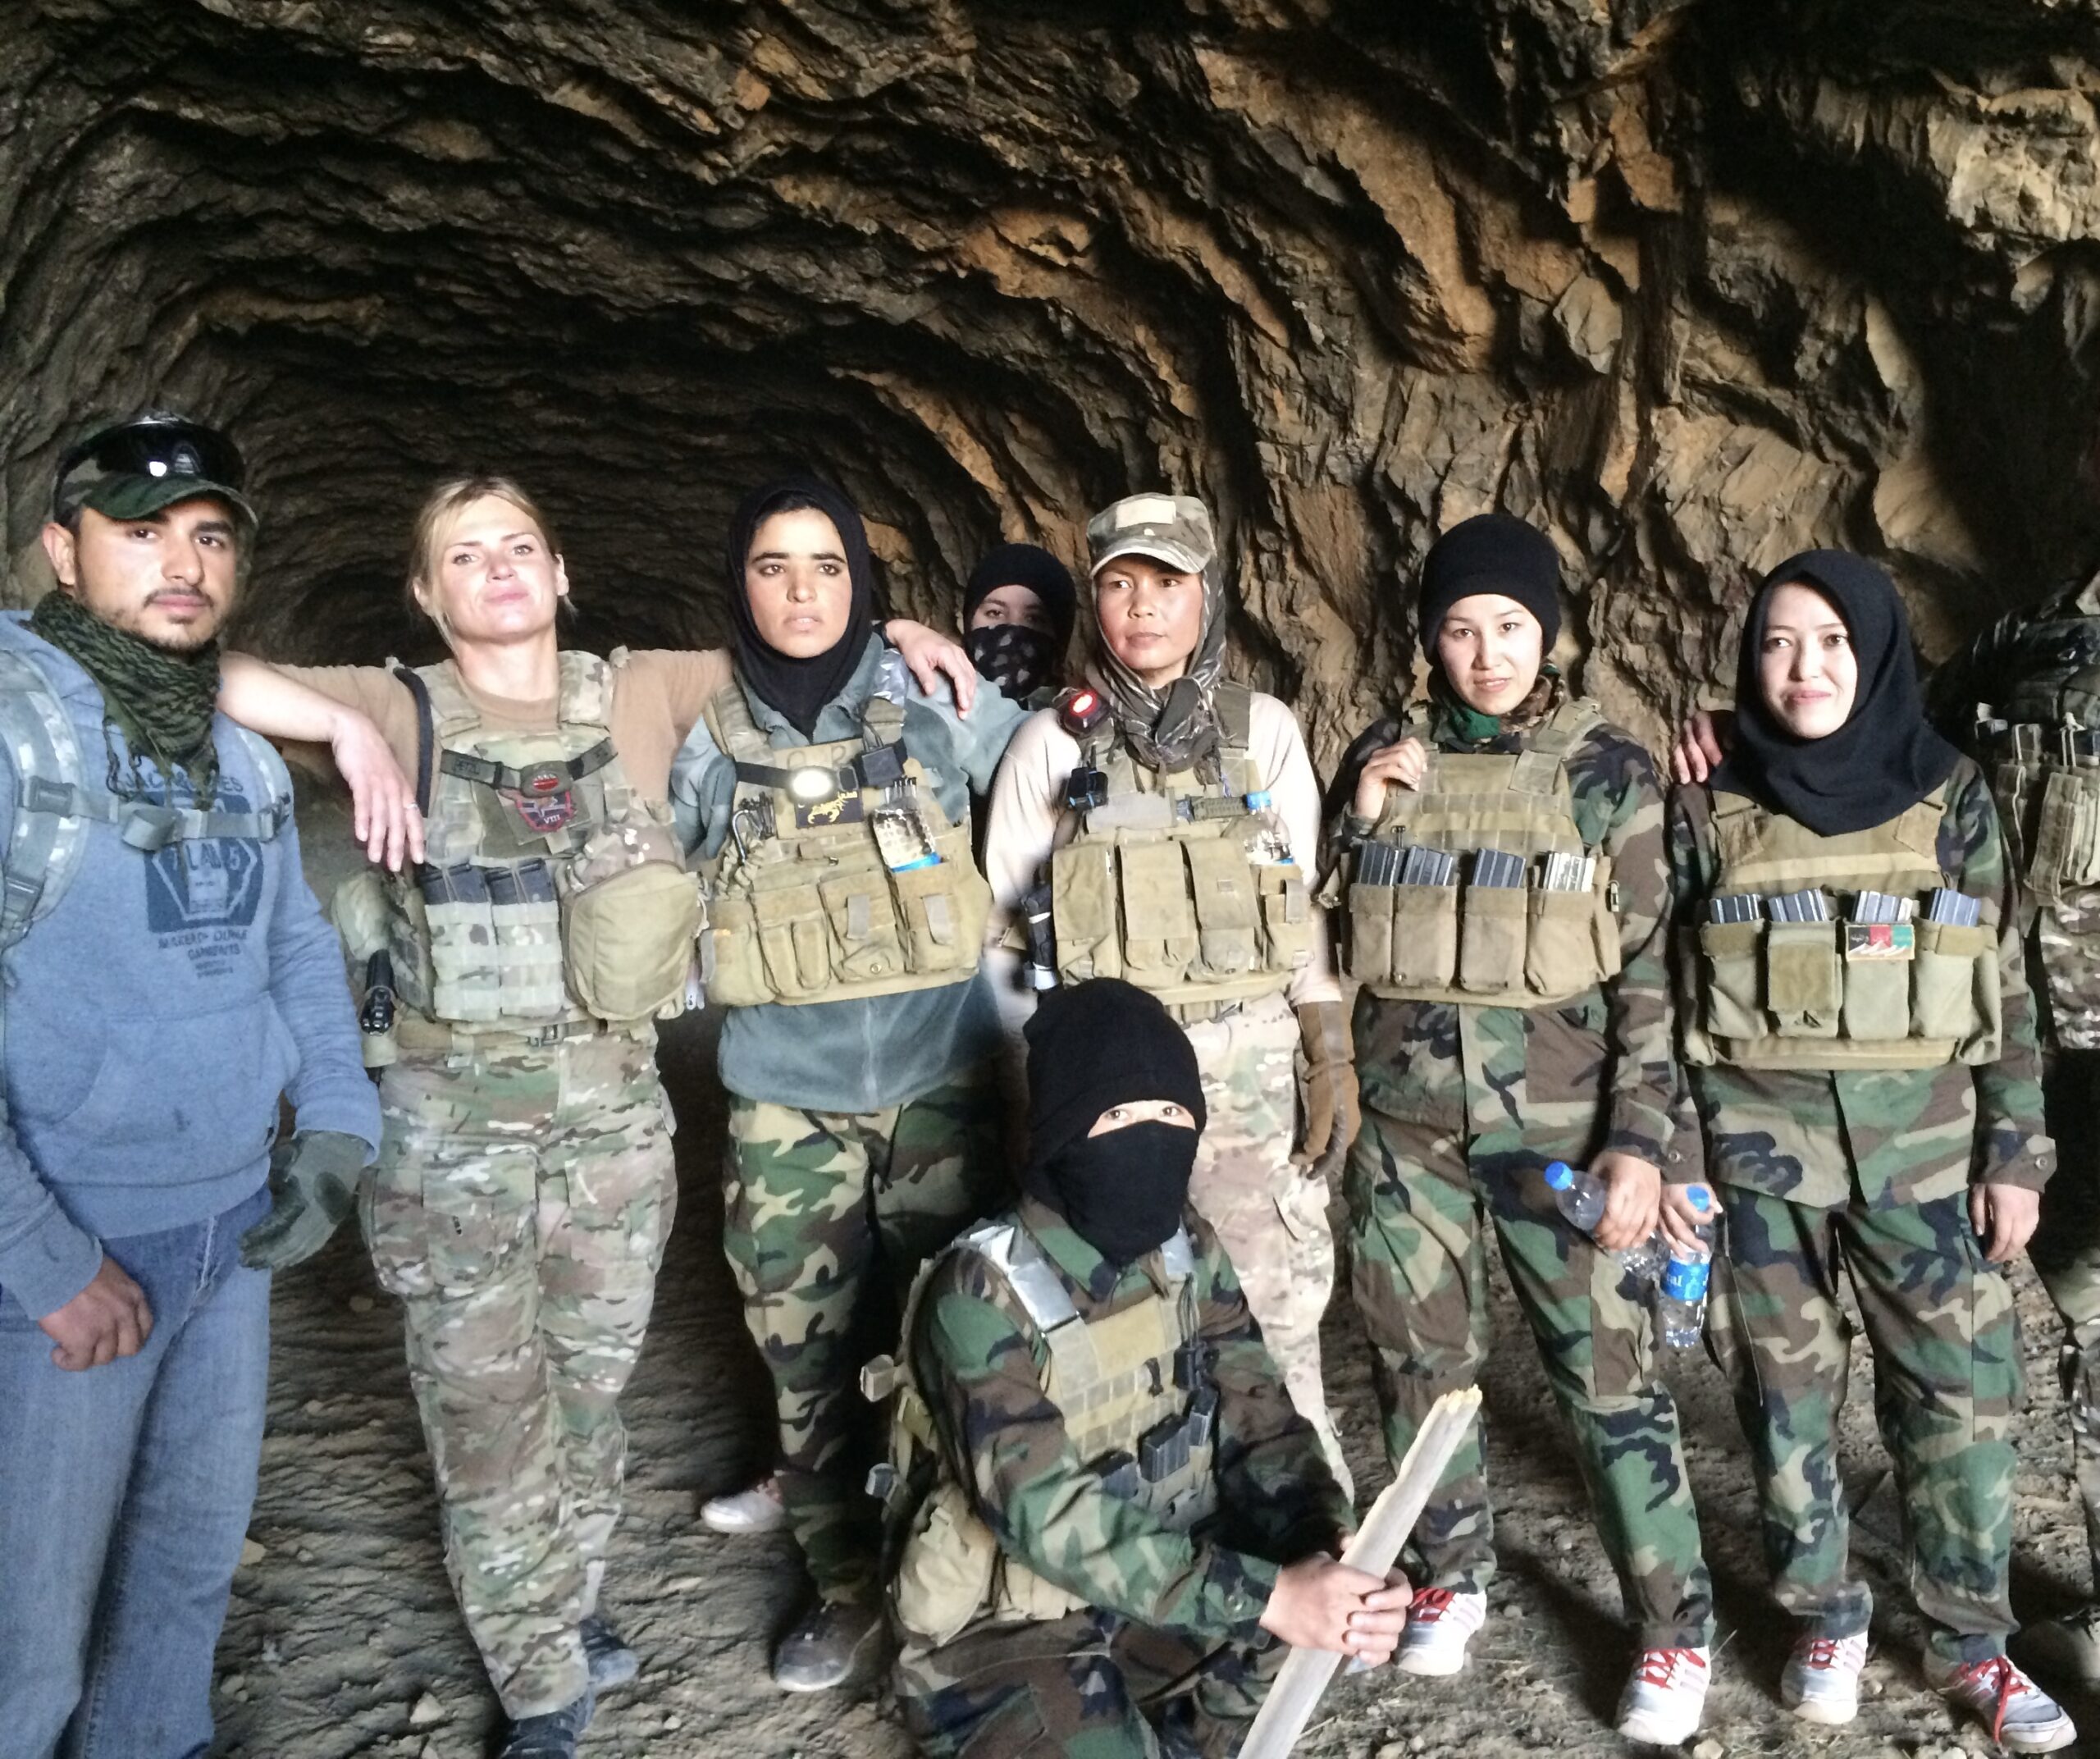 Rebekah Edmonson with Afghan women in military uniforms.